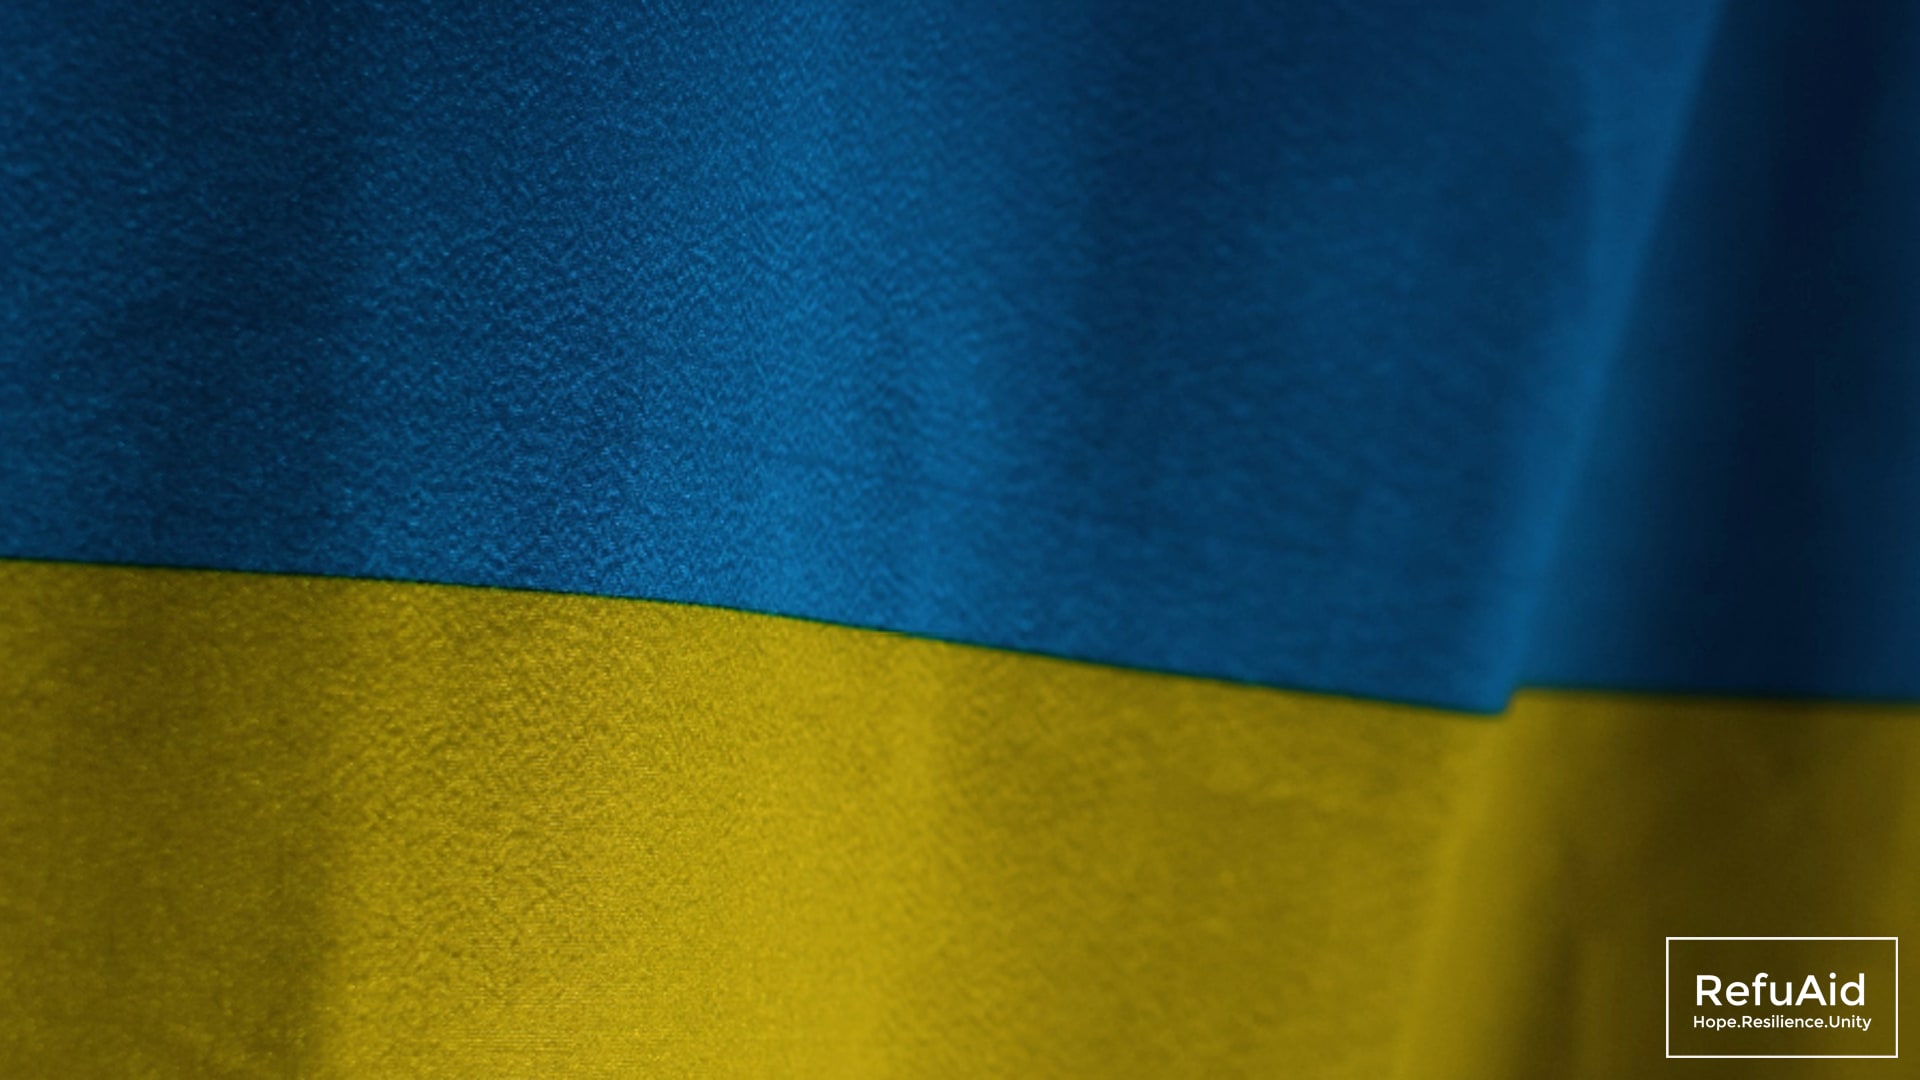 UK Ukraine Business Consortium Network background image